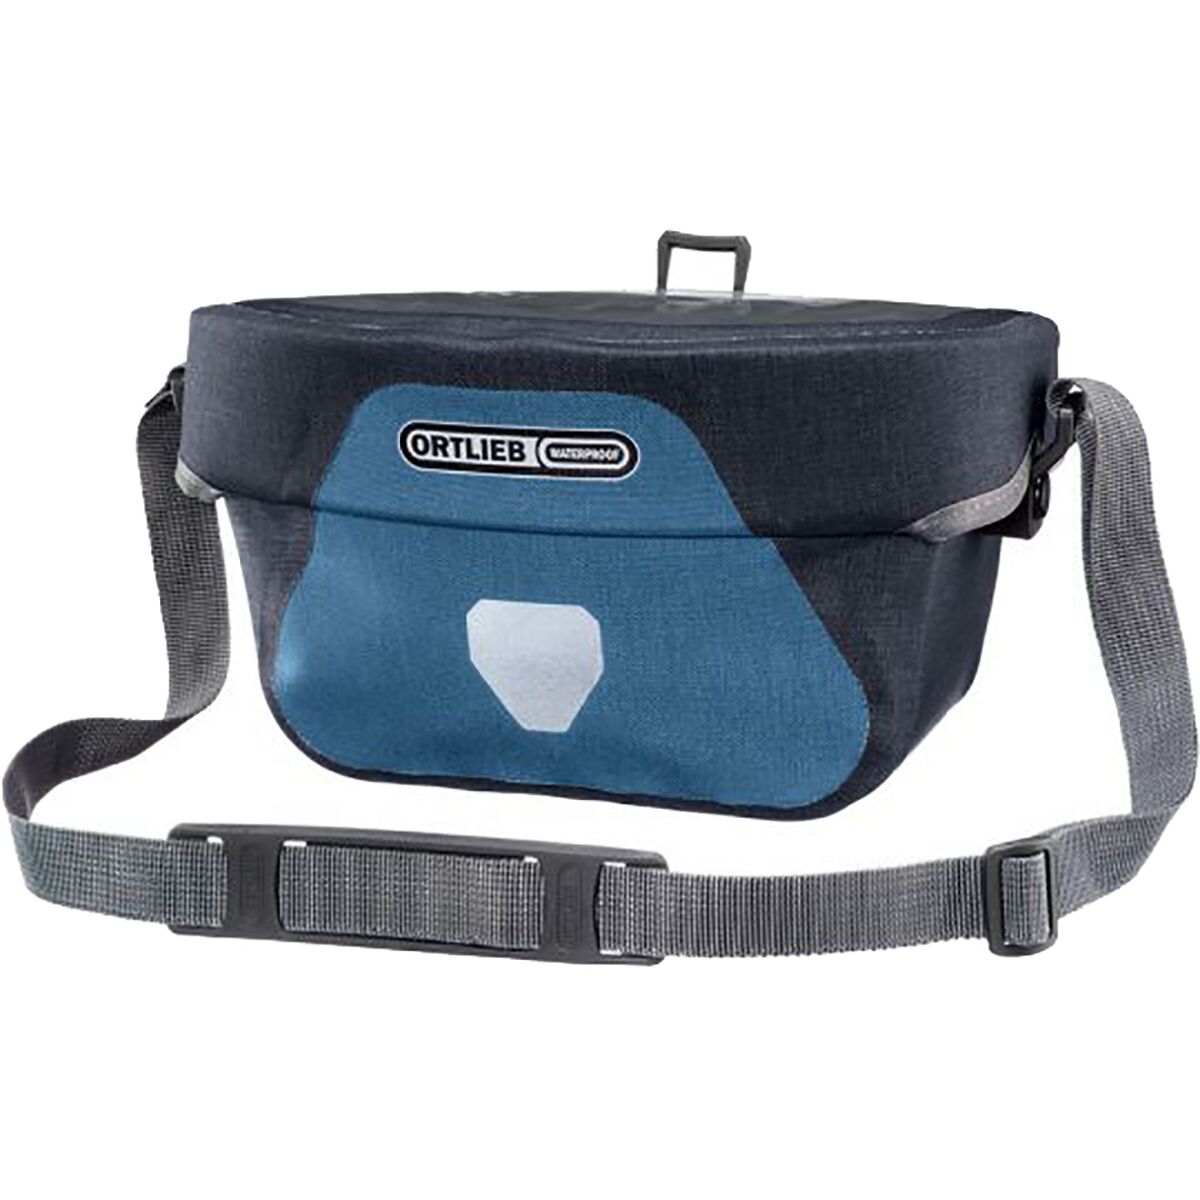 Ortlieb Ultimate 6 Plus 5-8.5L Handlebar Bag Dusk Blue/Denim, S, One